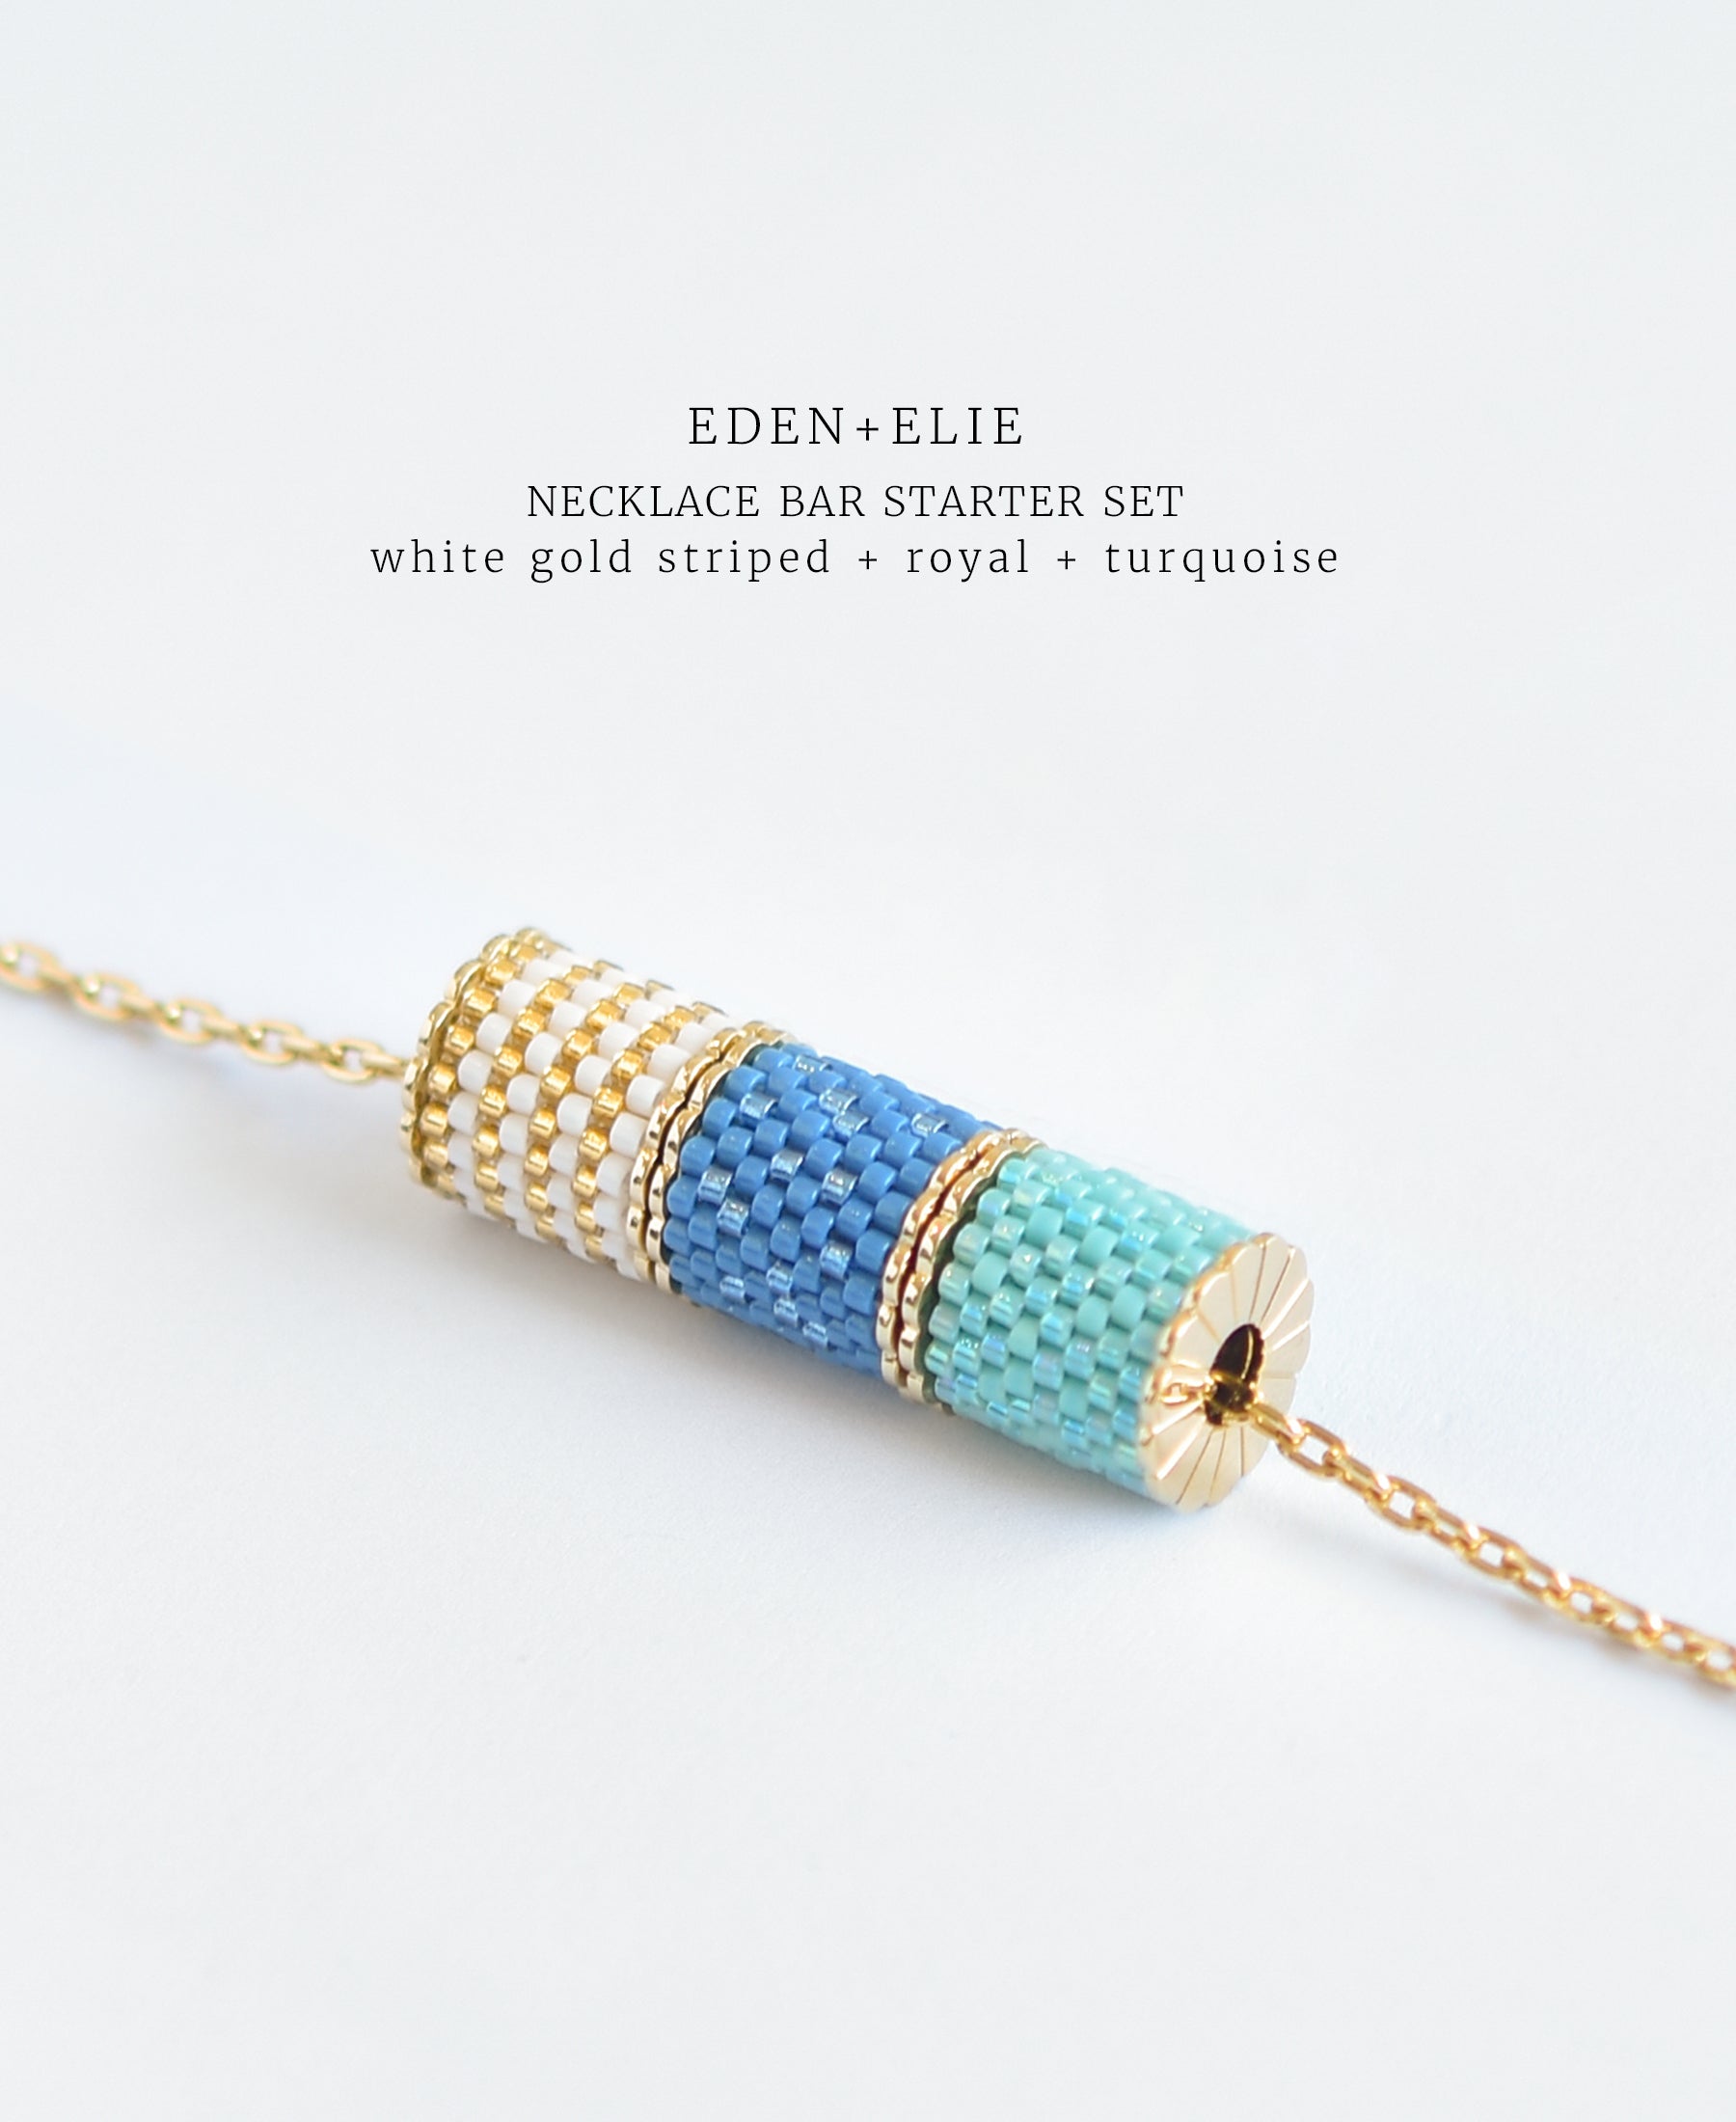 EDEN + ELIE Necklace Bar 3 bead starter set - turquoise + royal + white gold striped